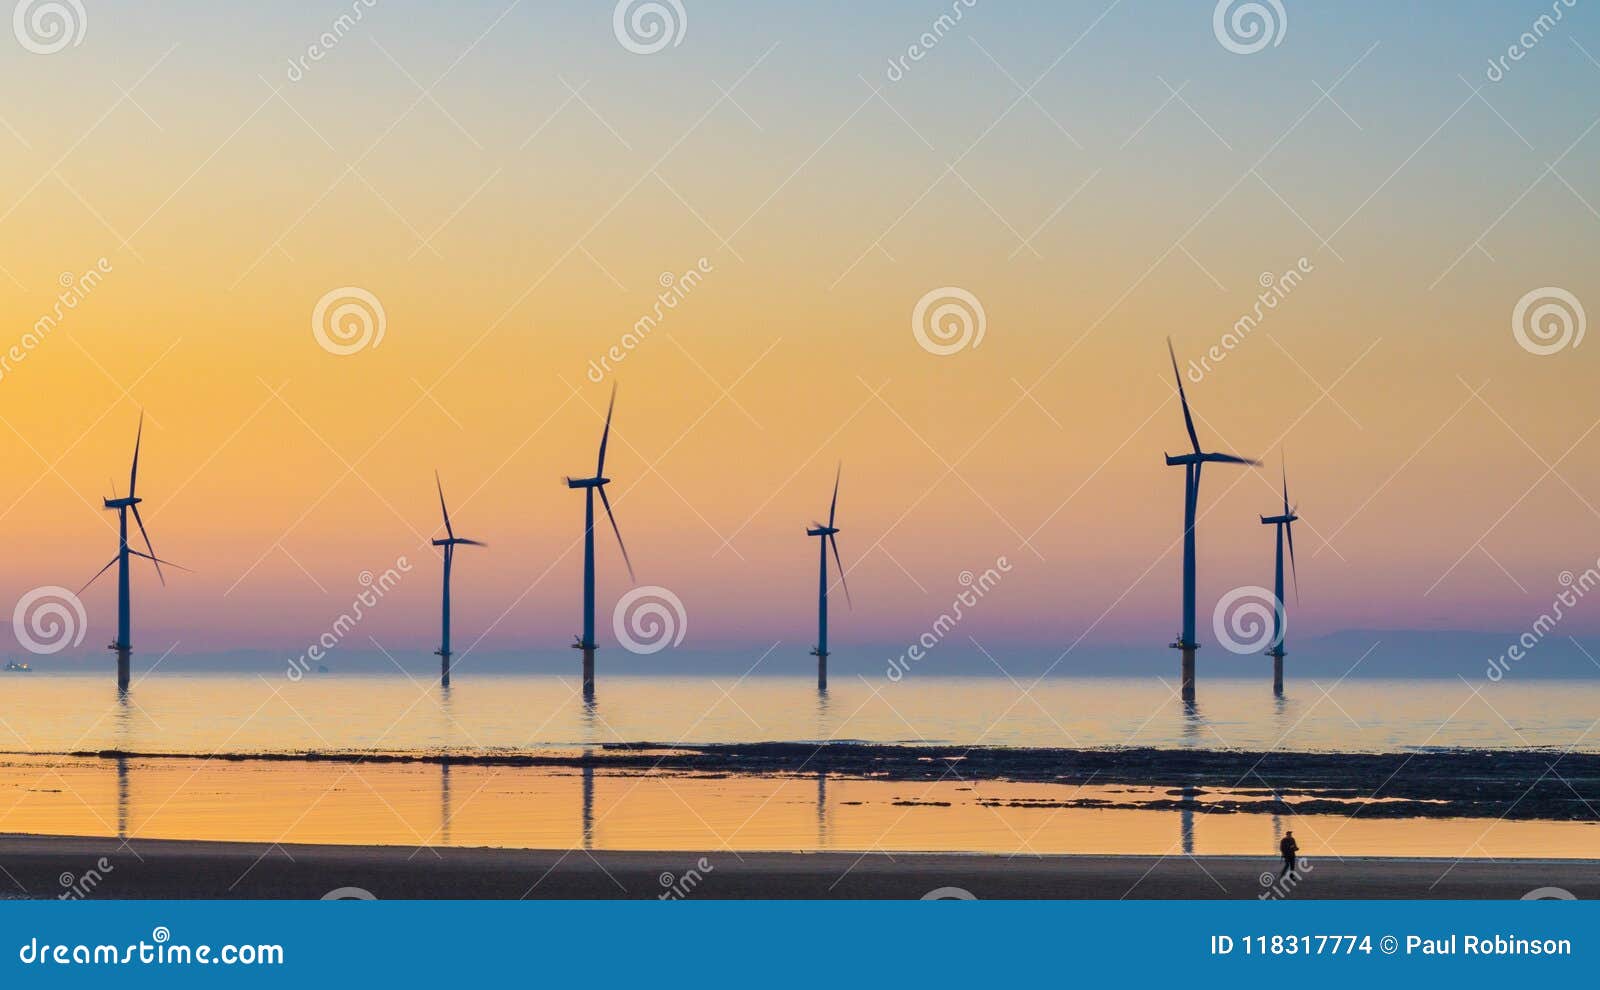 windfarm on redcar coastline.